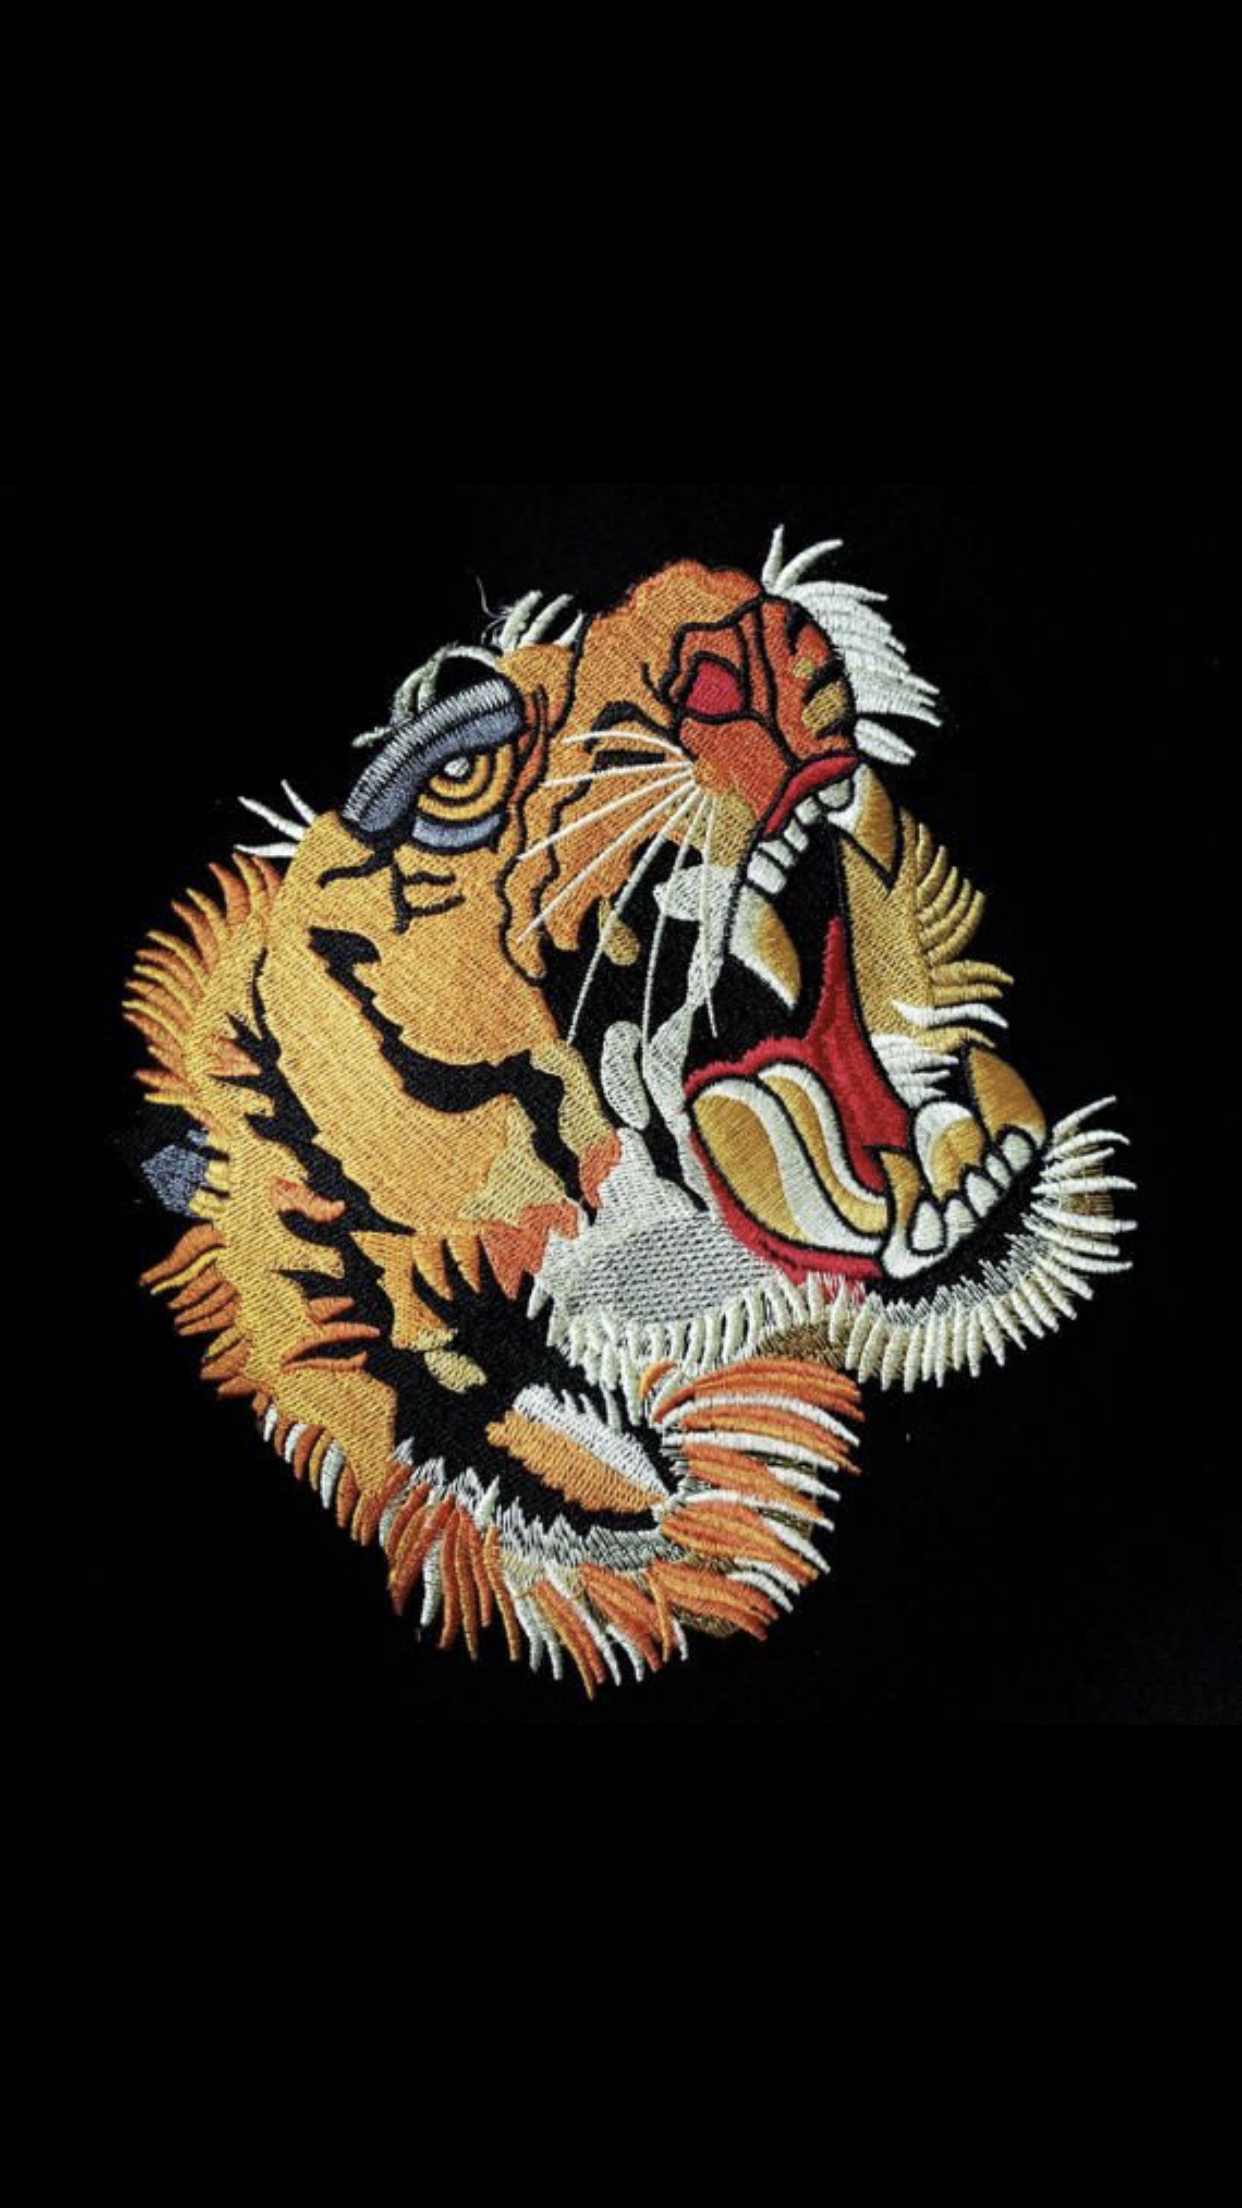 Gucci tiger wallpaper. Apple logo wallpaper, Tiger